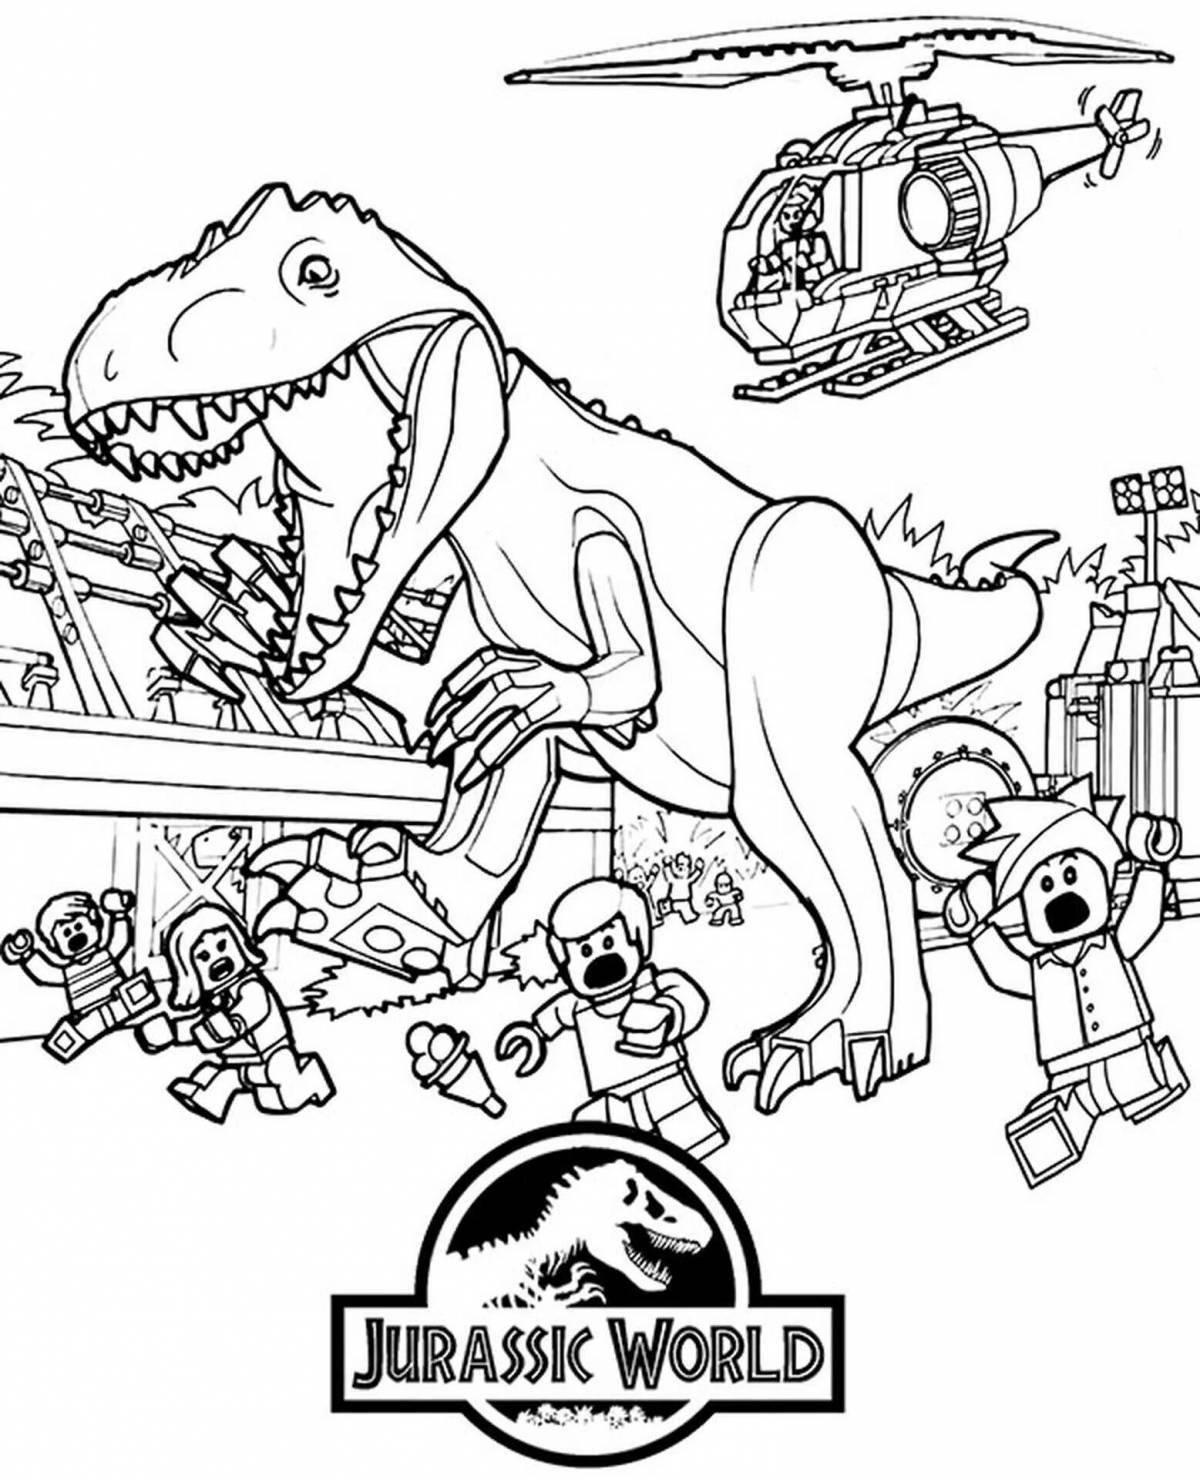 Dazzling Jurassic World 3 coloring book